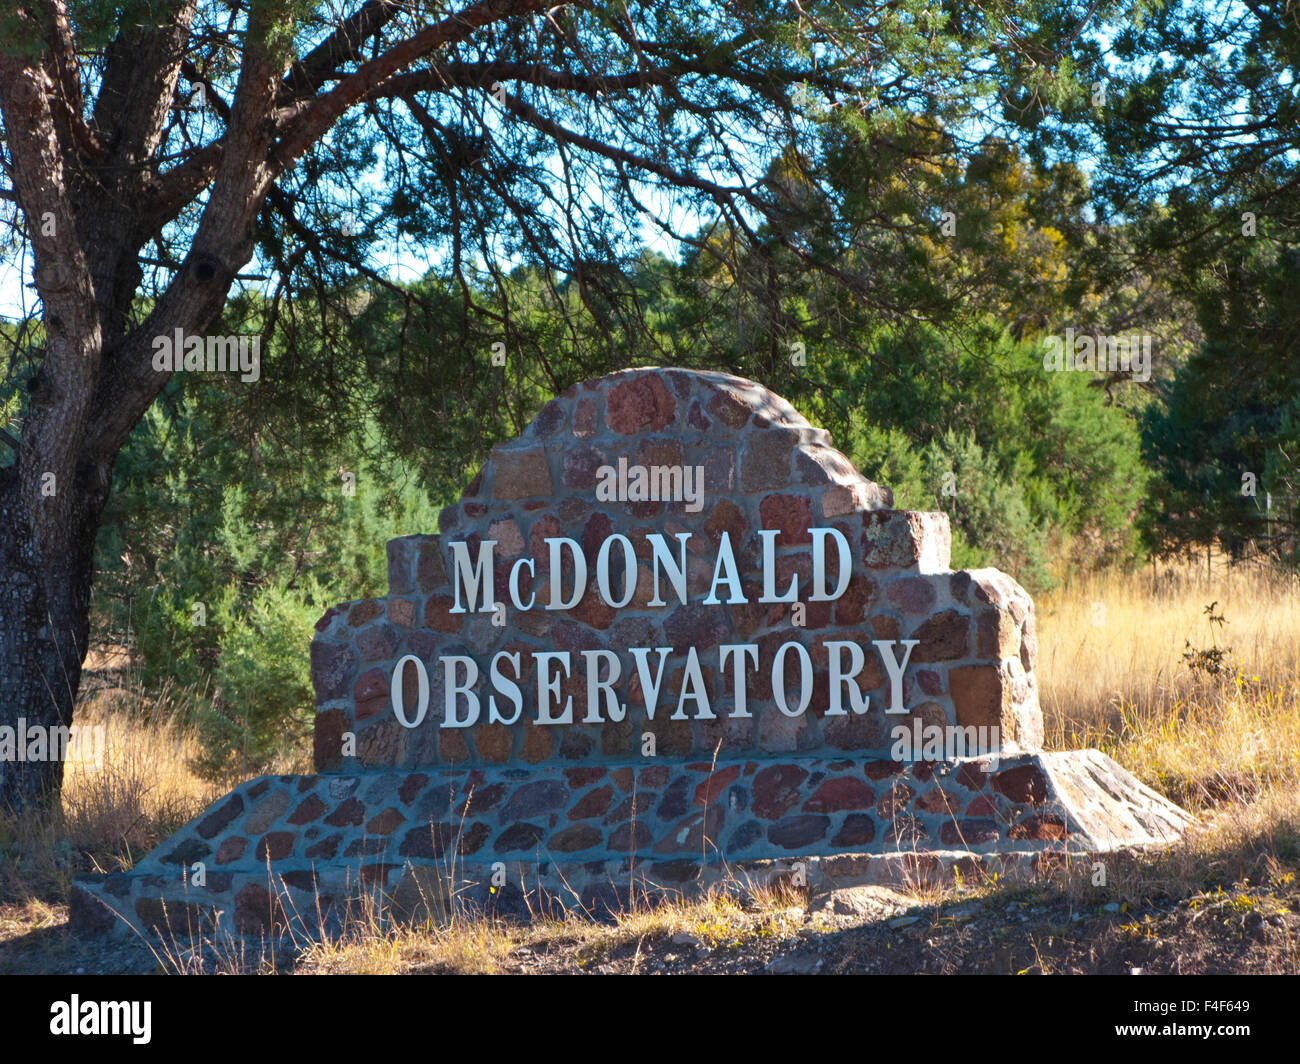 USA, Fort Davis, Texas, McDonald Observatorium Eingang Denkmal Zeichen. Stockfoto